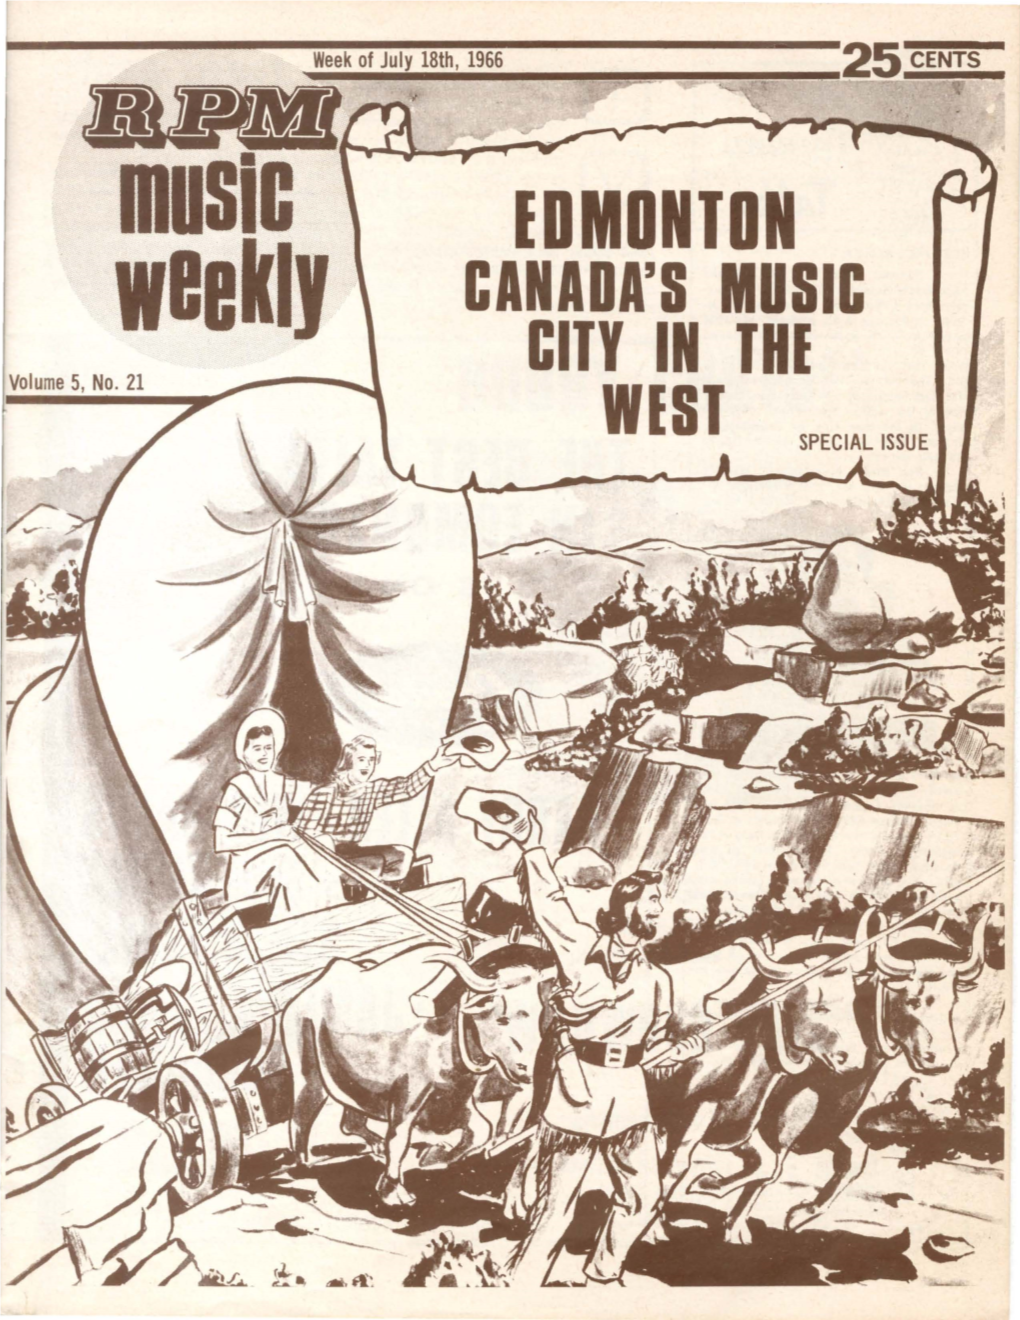 EDMONTON CANADA's MUSIC CITY in the Volume 5, No